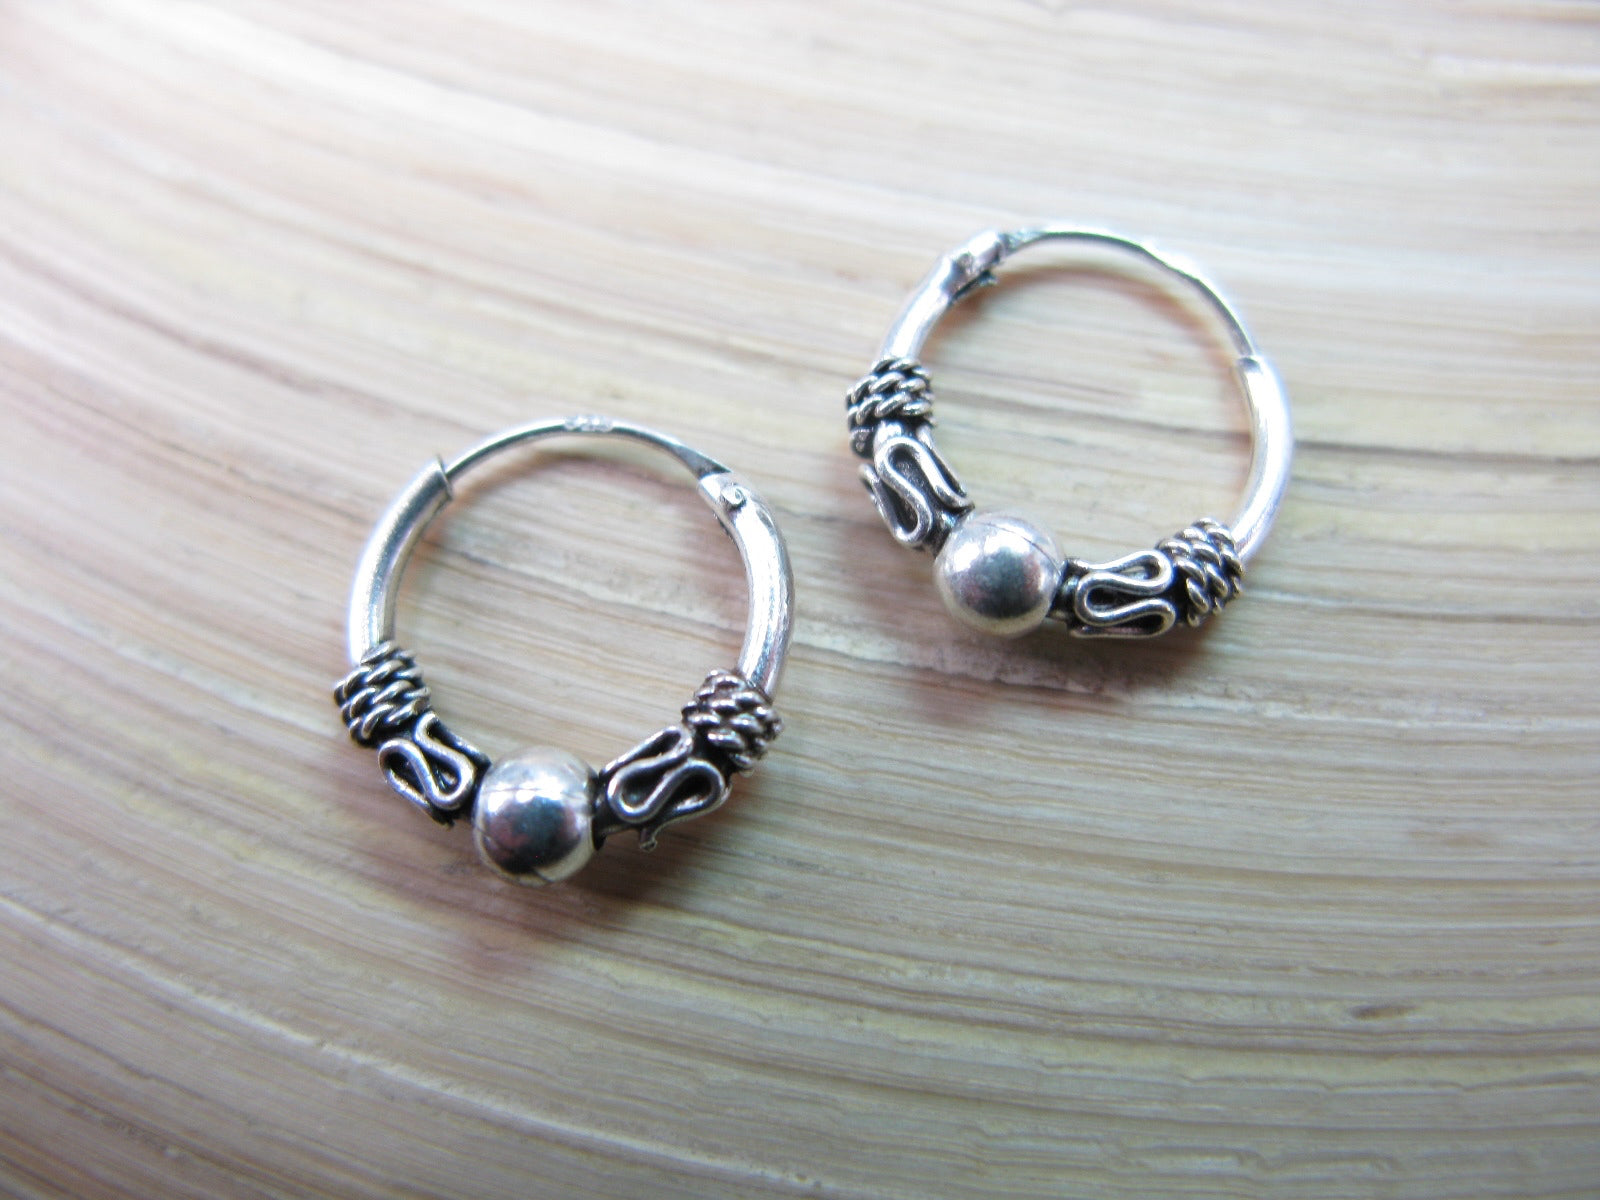 12mm Balinese Oxidized Hoop Earrings in 925 Sterling Silver